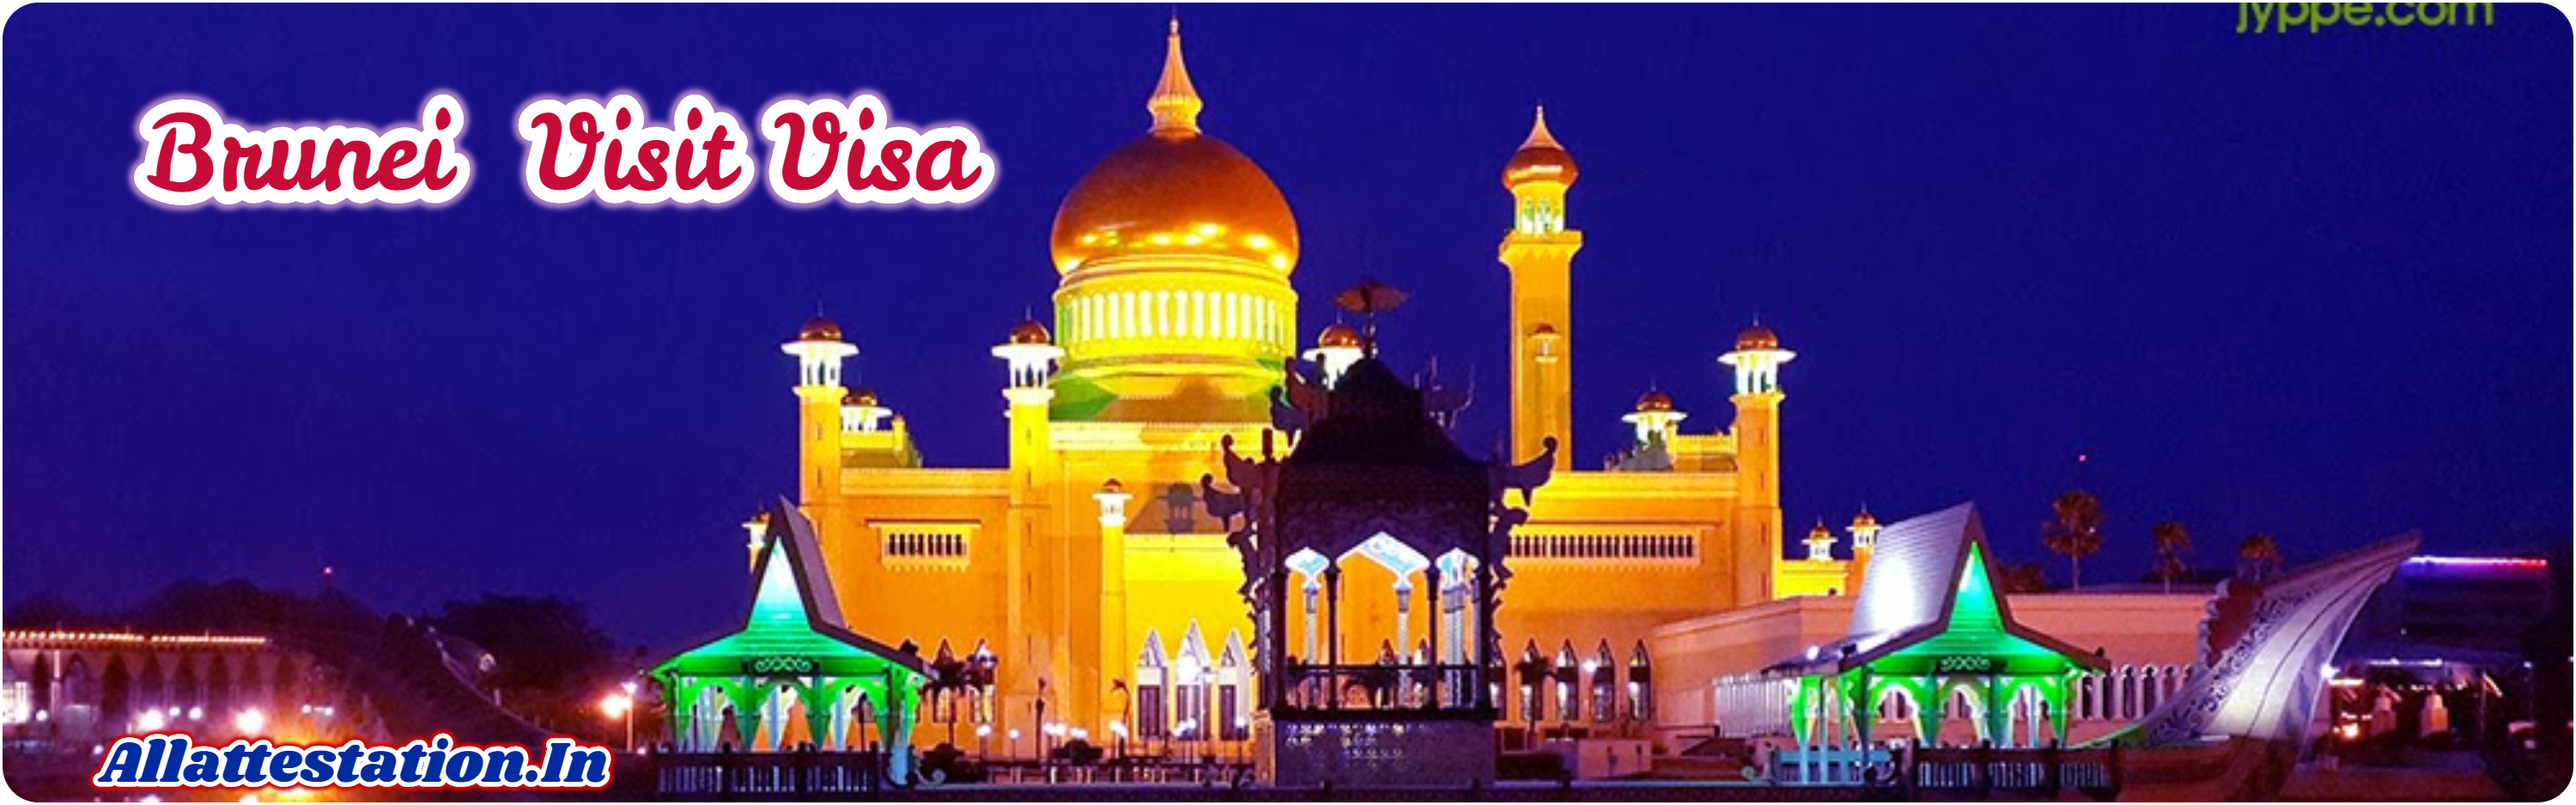 Brunei-Visit-Visa.html